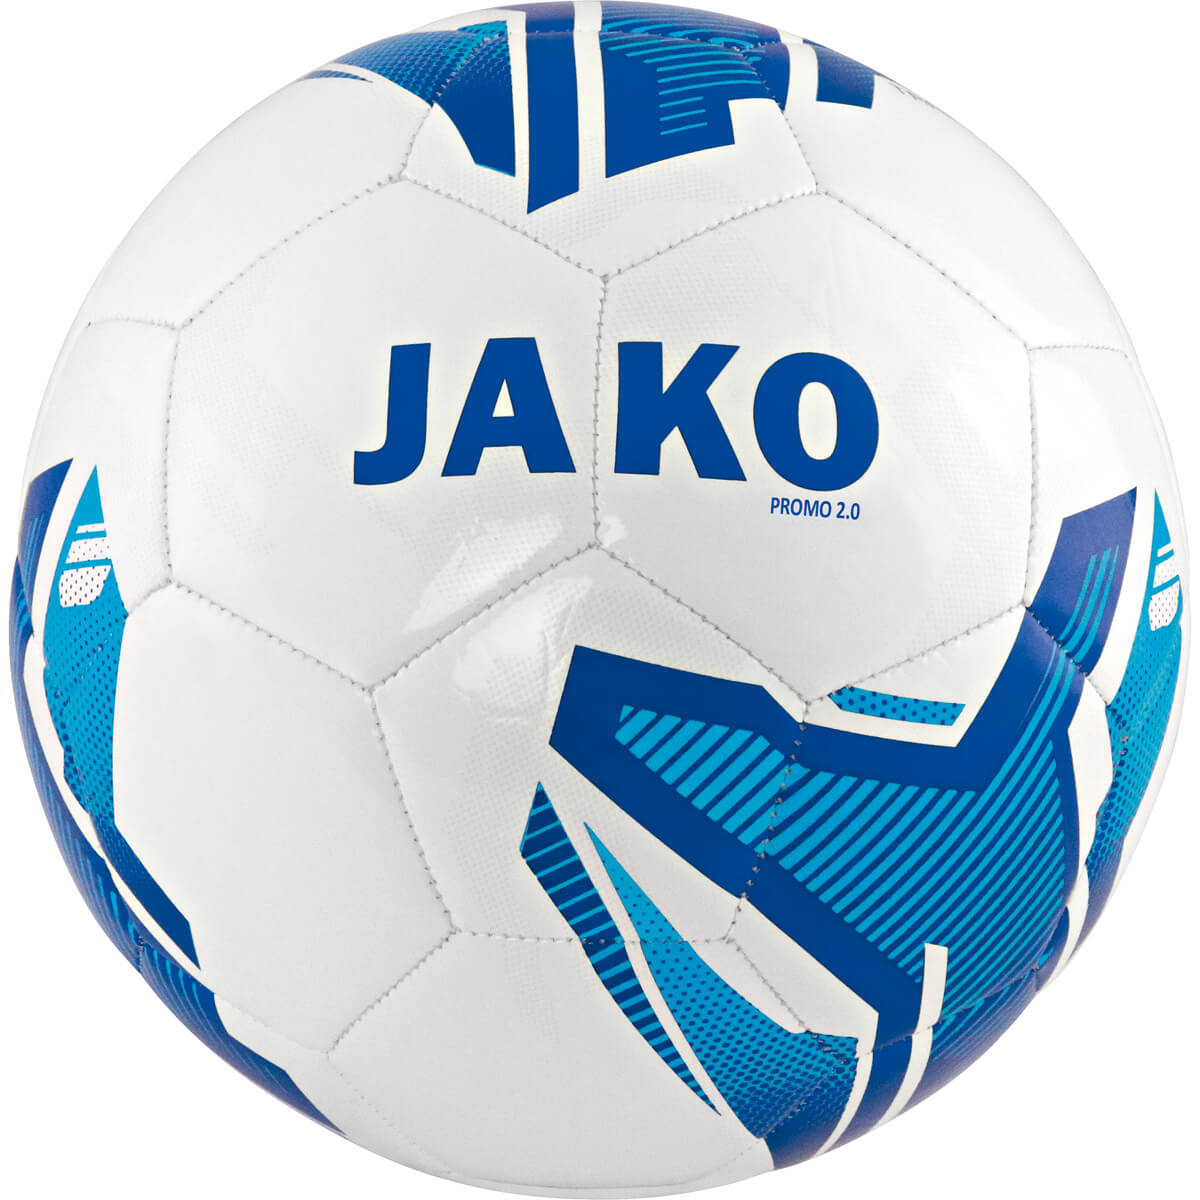 JAKO 2310-04 Promo Training Ball 2.0